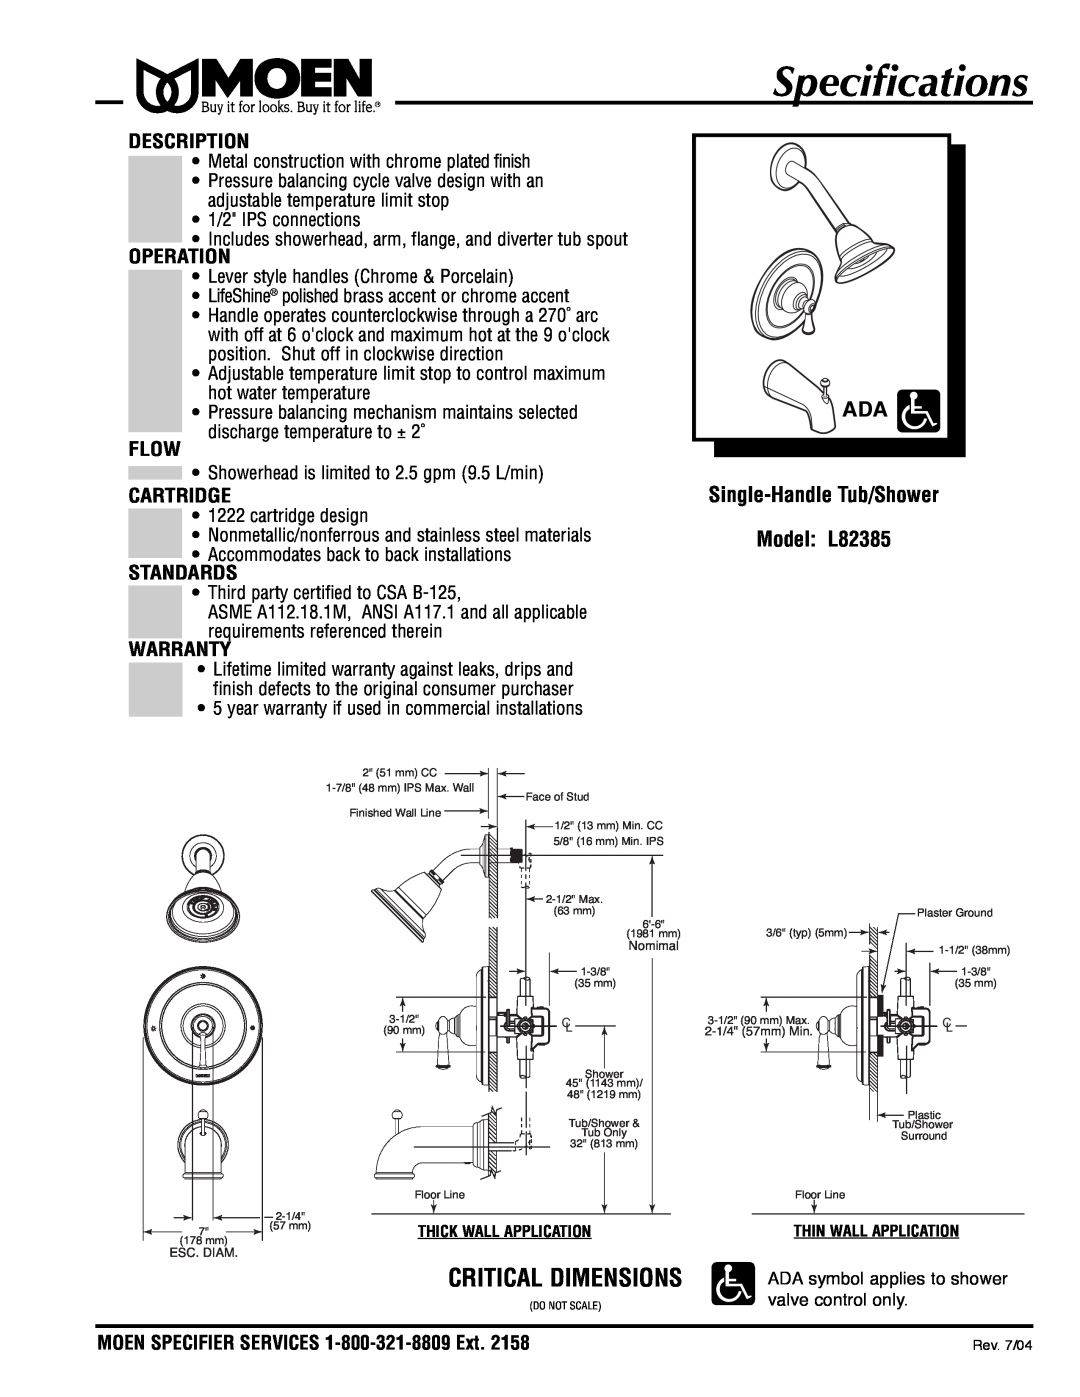 Moen specifications Specifications, Single-Handle Tub/Shower Model L82385, Description, Operation, Flow, Cartridge 